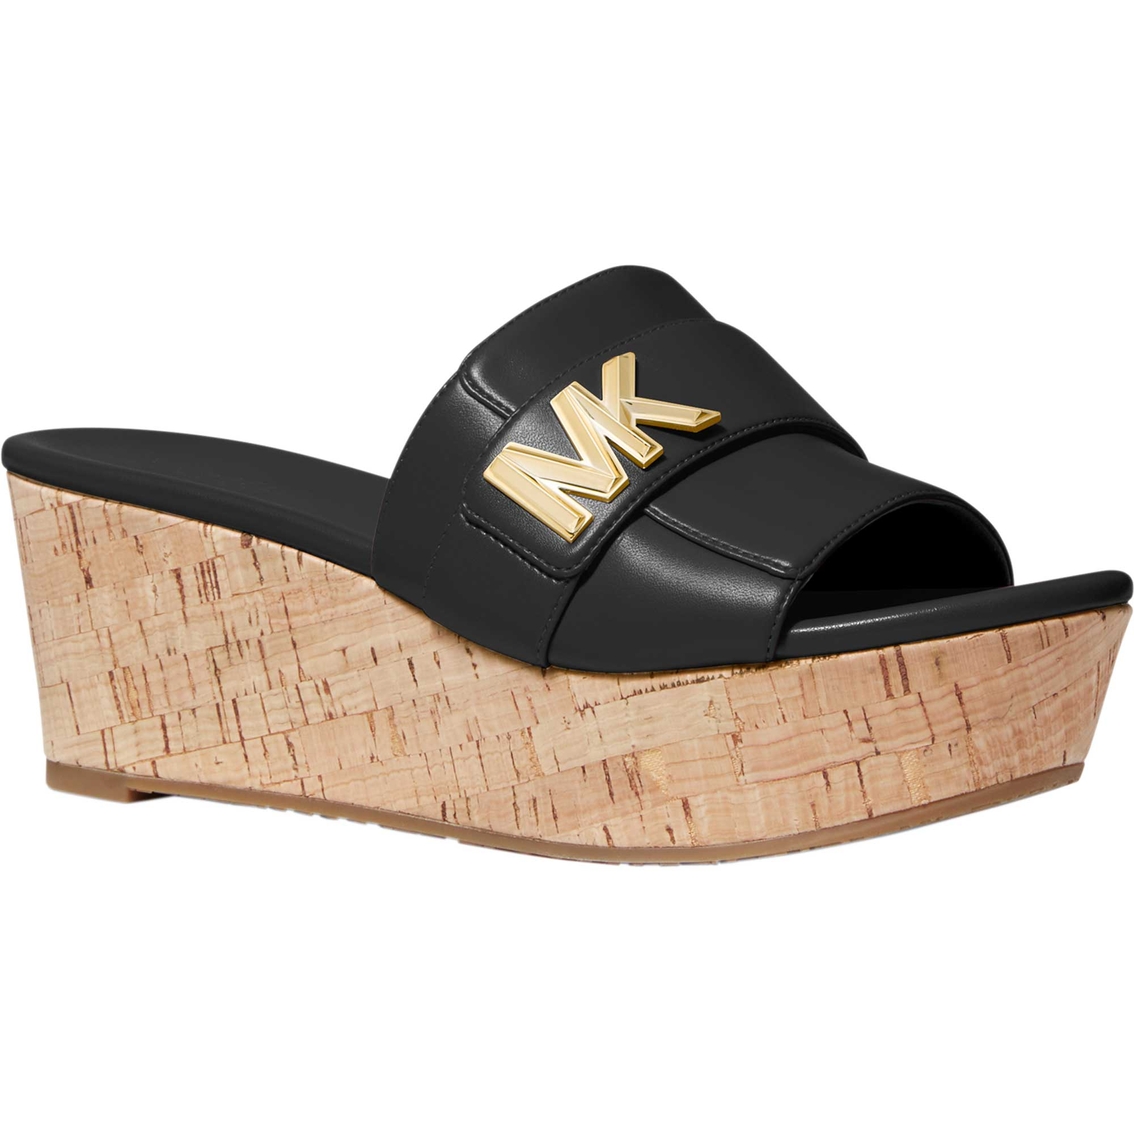 Michael Kors Jilly Platform Slides | Flats | Shoes | Shop The Exchange